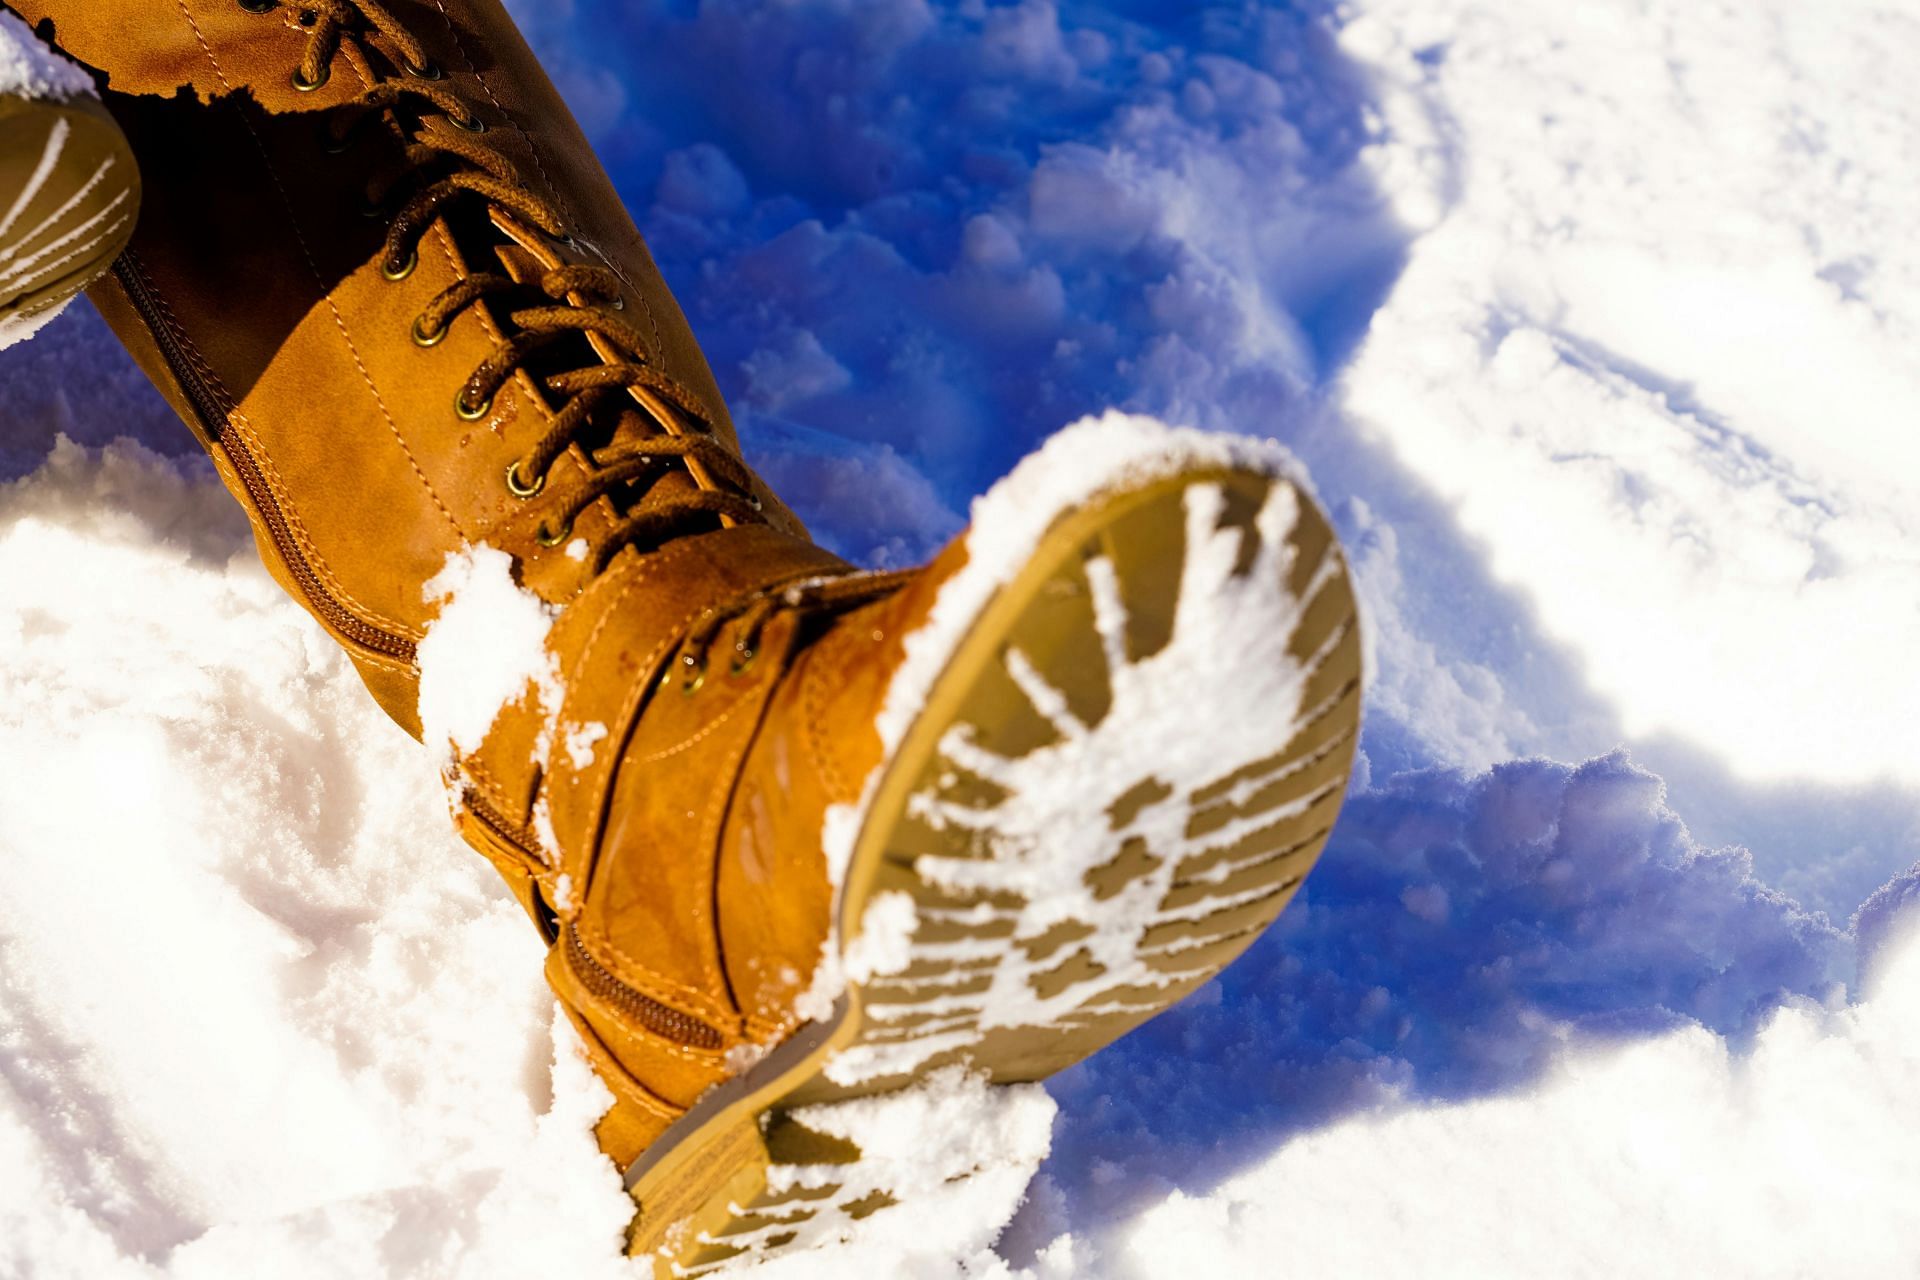 Winter boots (Image via Pexels/@Nikita Khandelwal)